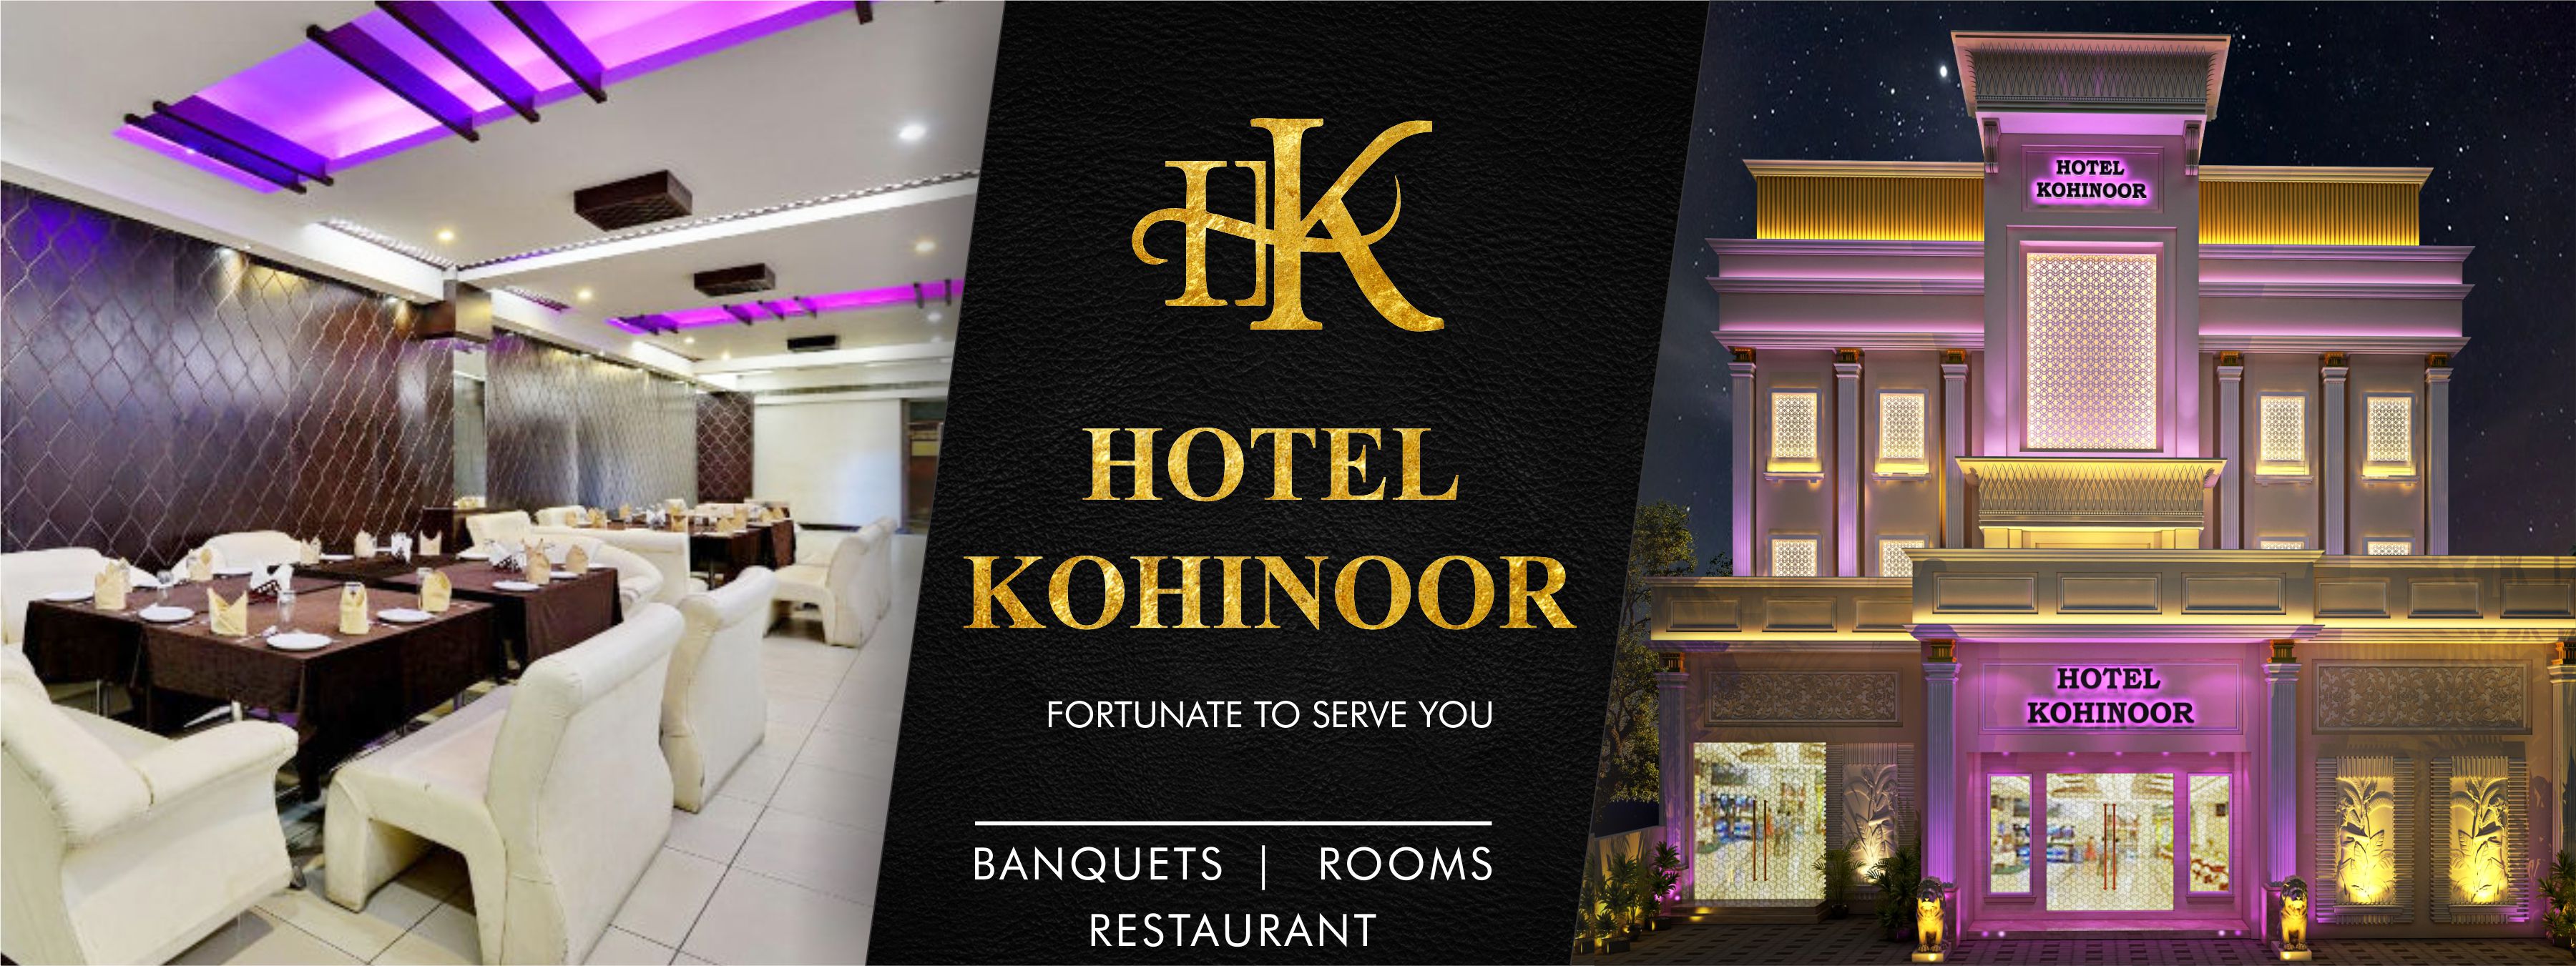 Hotel Kohinoor Palace-Banquet Halls4